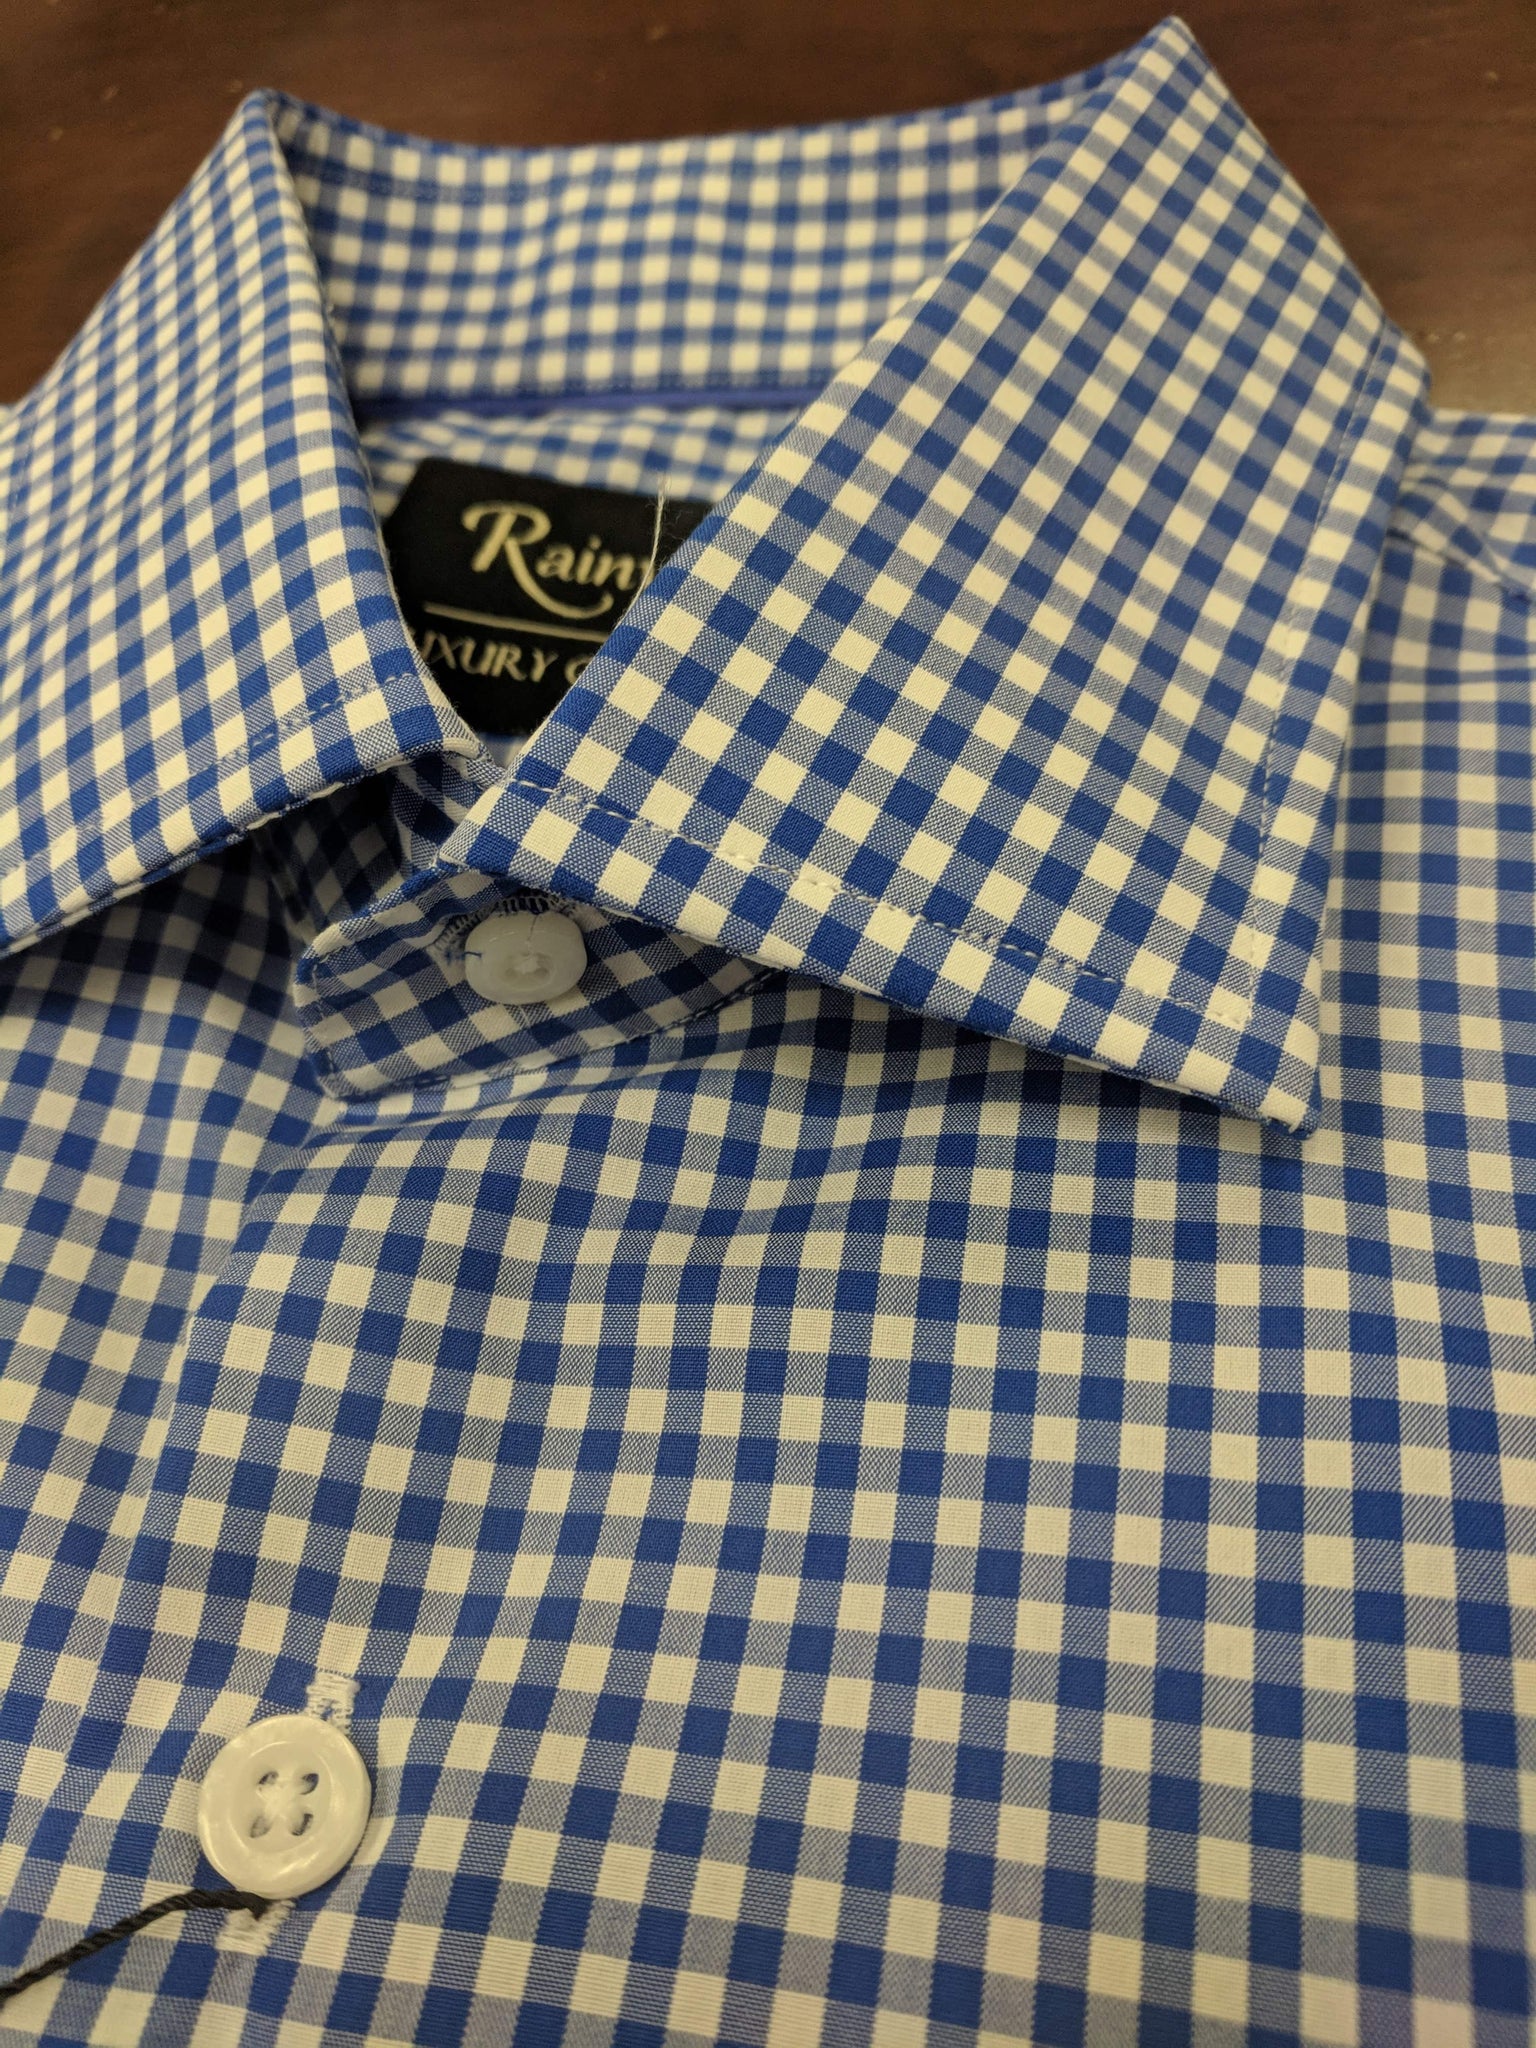 Rainwater's Blue Gingham 80's 100% Cotton Non-Iron Dress Shirt - Rainwater's Men's Clothing and Tuxedo Rental